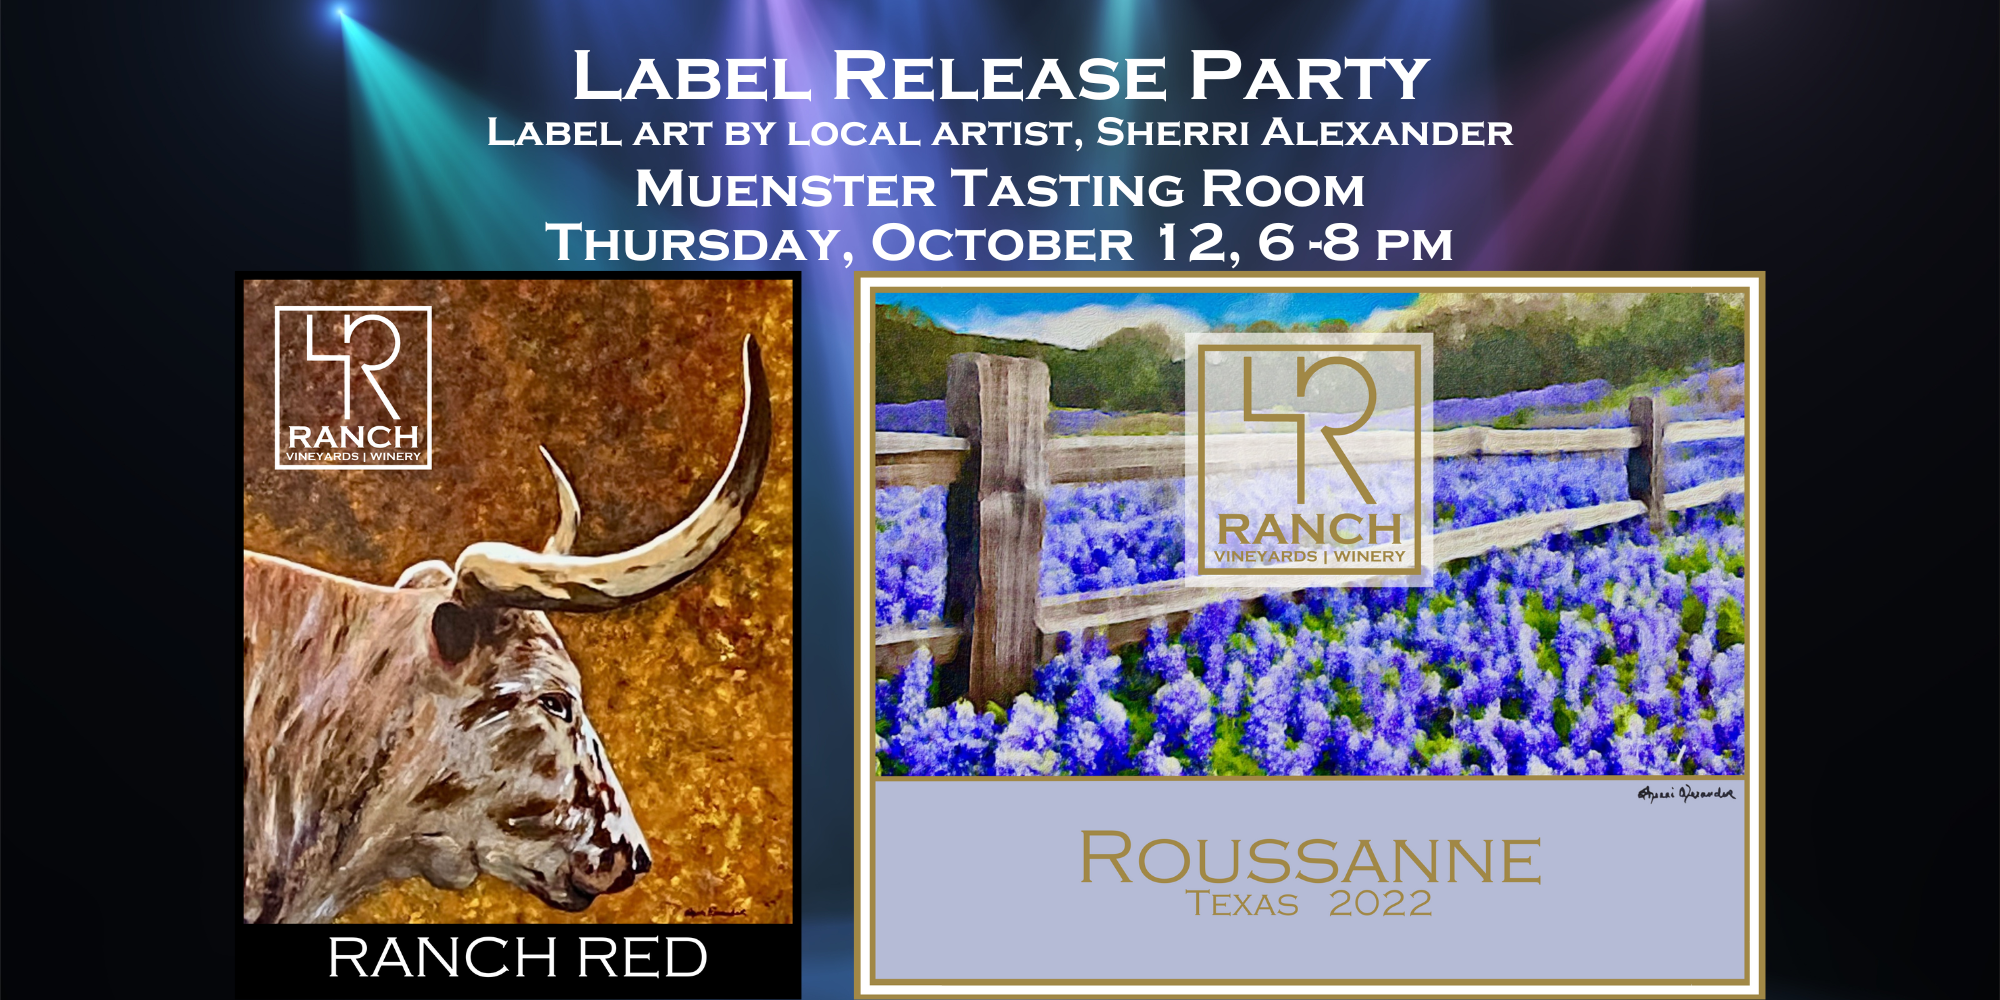 Label Release Party, Muenster Tasting Room, Thaursday, October 12, 6 -8 pm